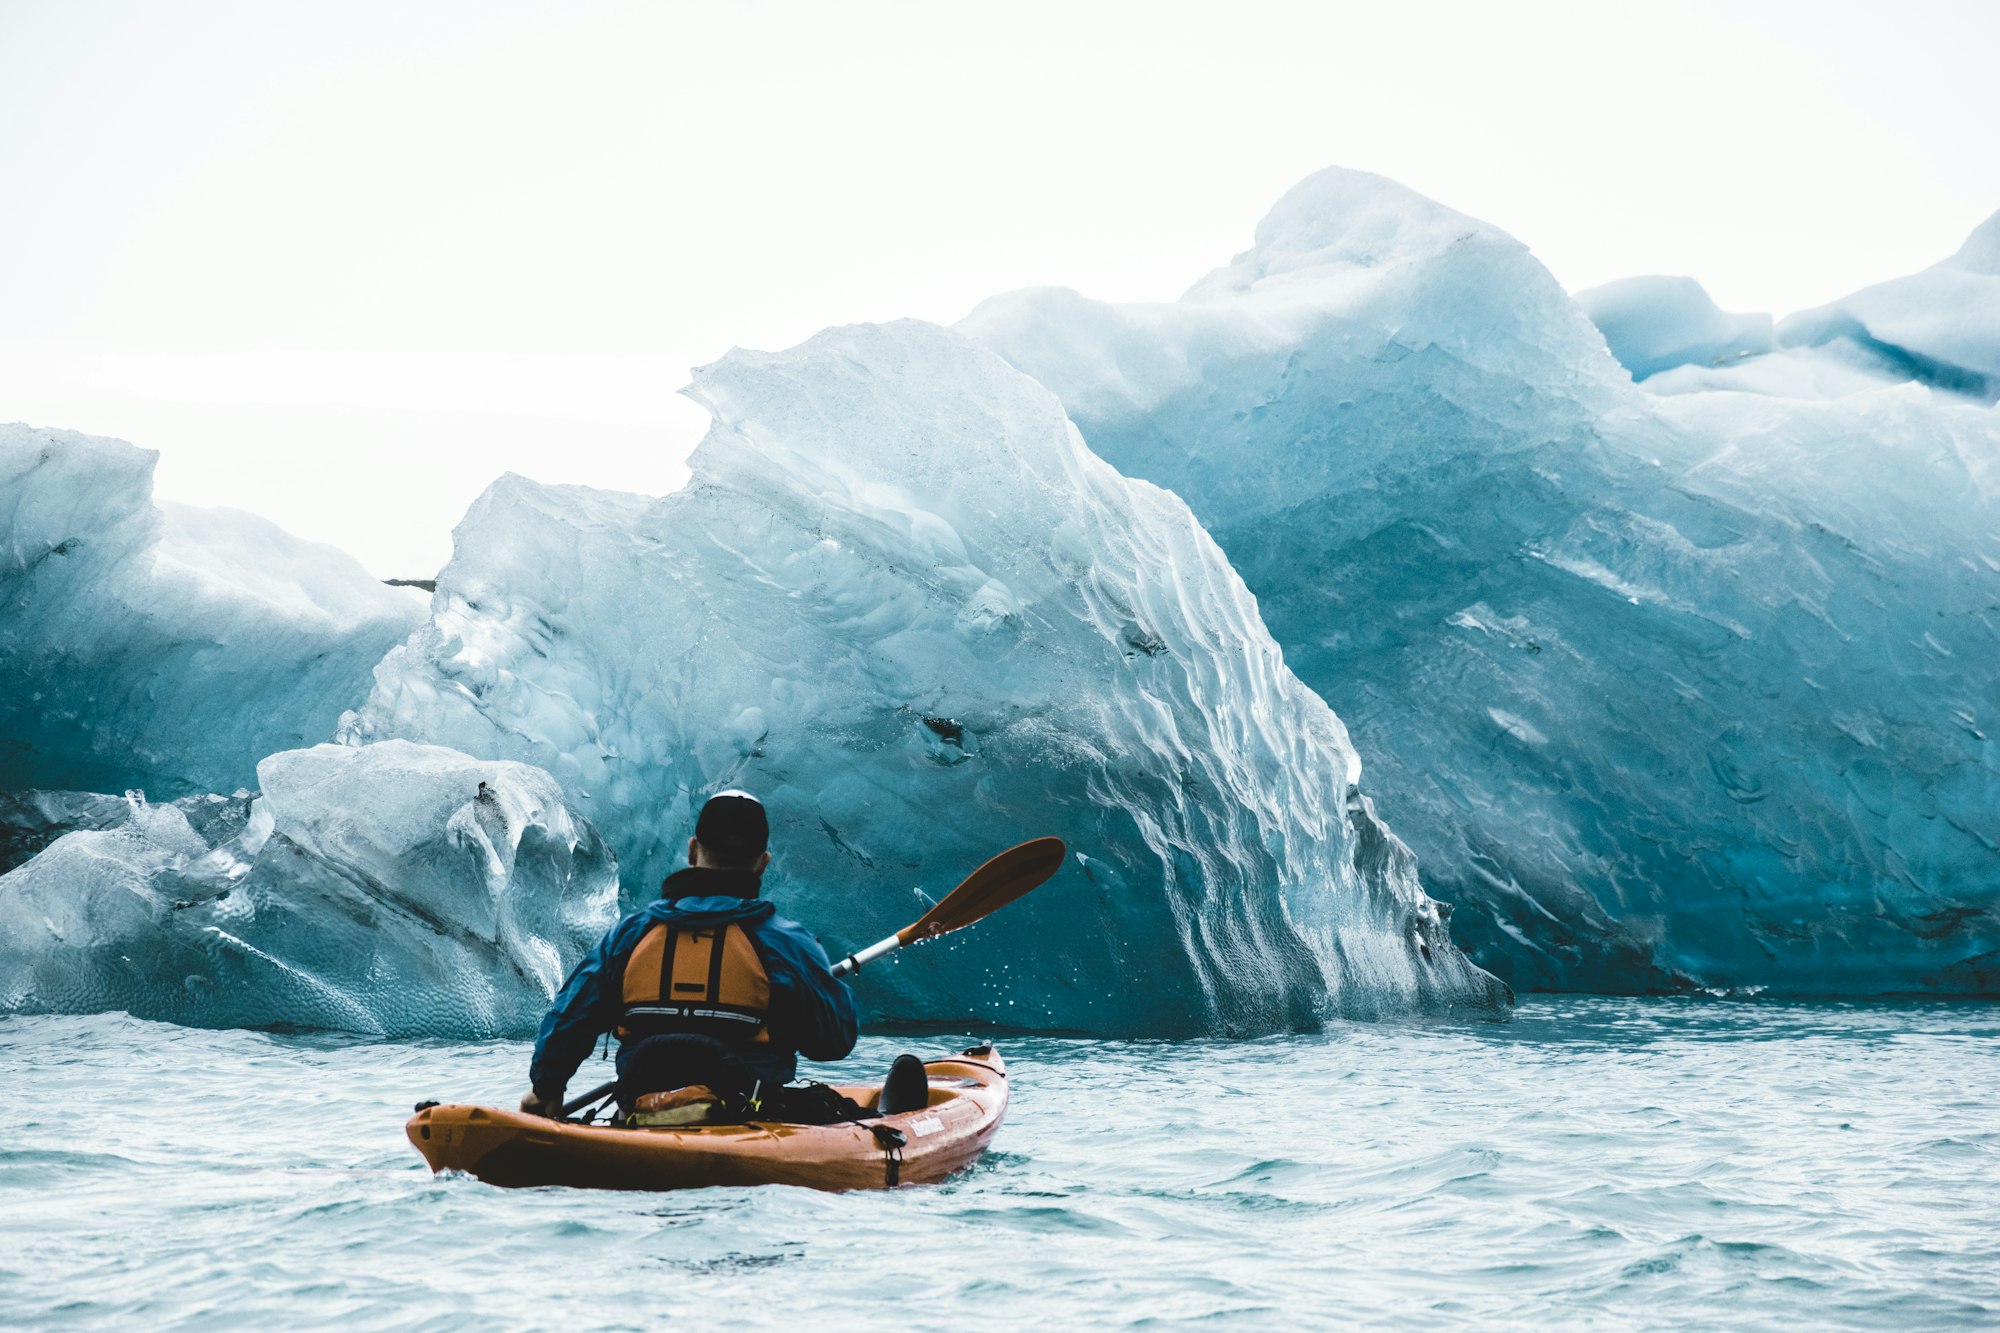 A guide kayaking through the glacial icebergs of Jökulsárlón, Iceland